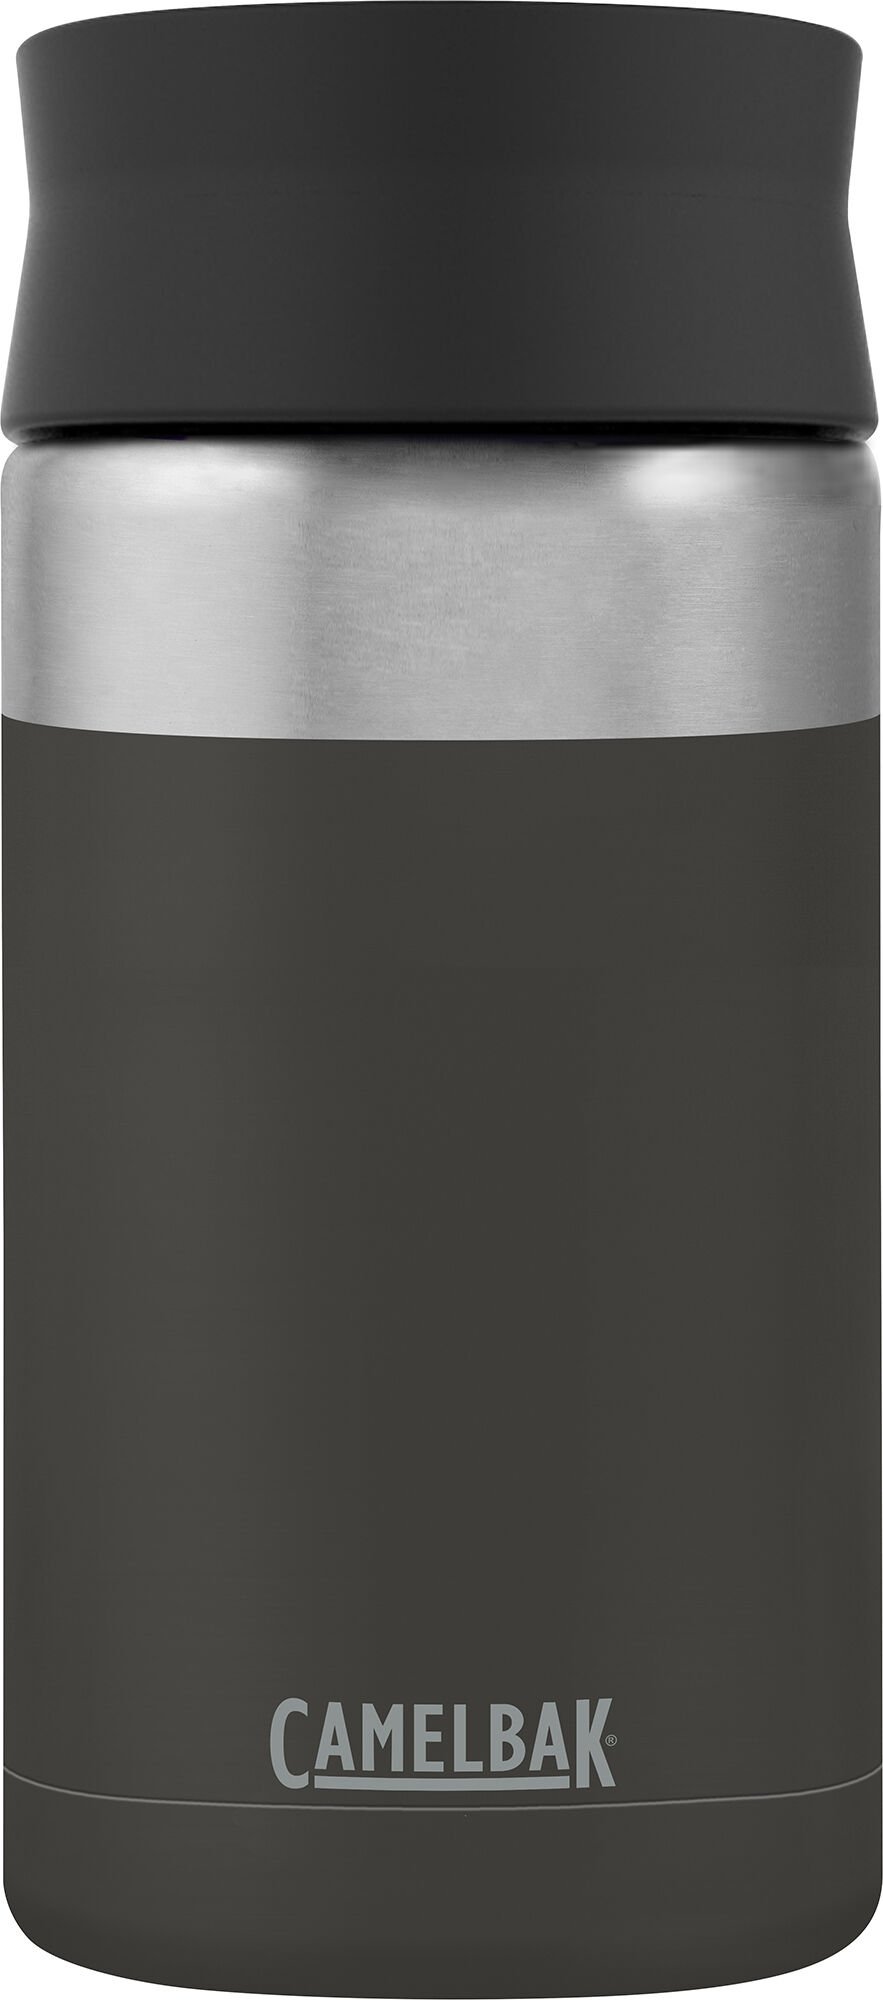 Camelbak Hot Cap Vacuum Stainless 400 mL - Vacuum flask